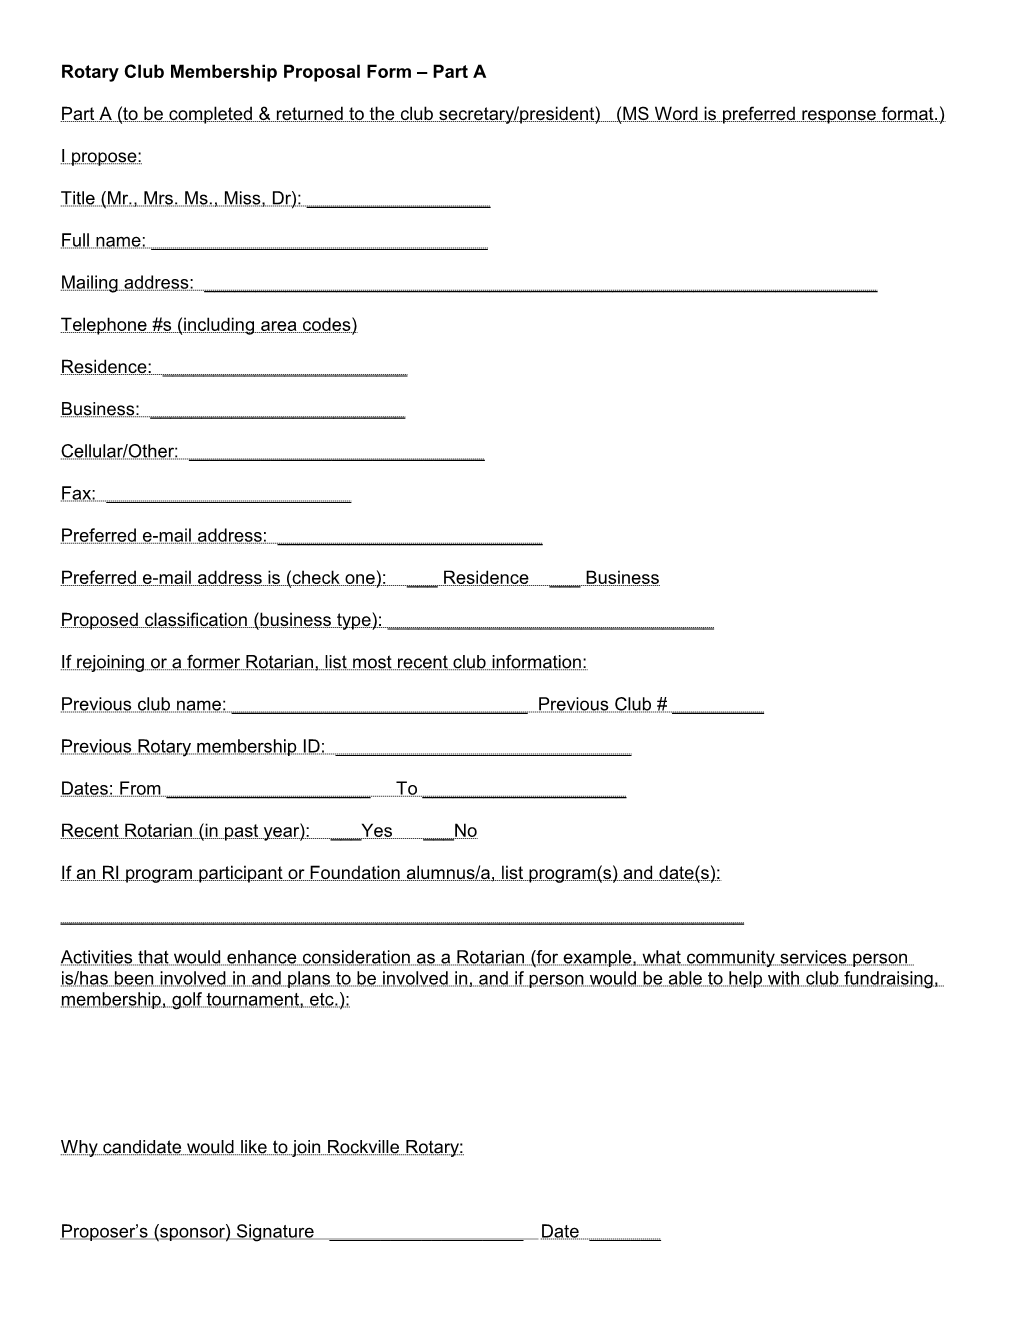 Rotary Club Membership Proposal Form Part A